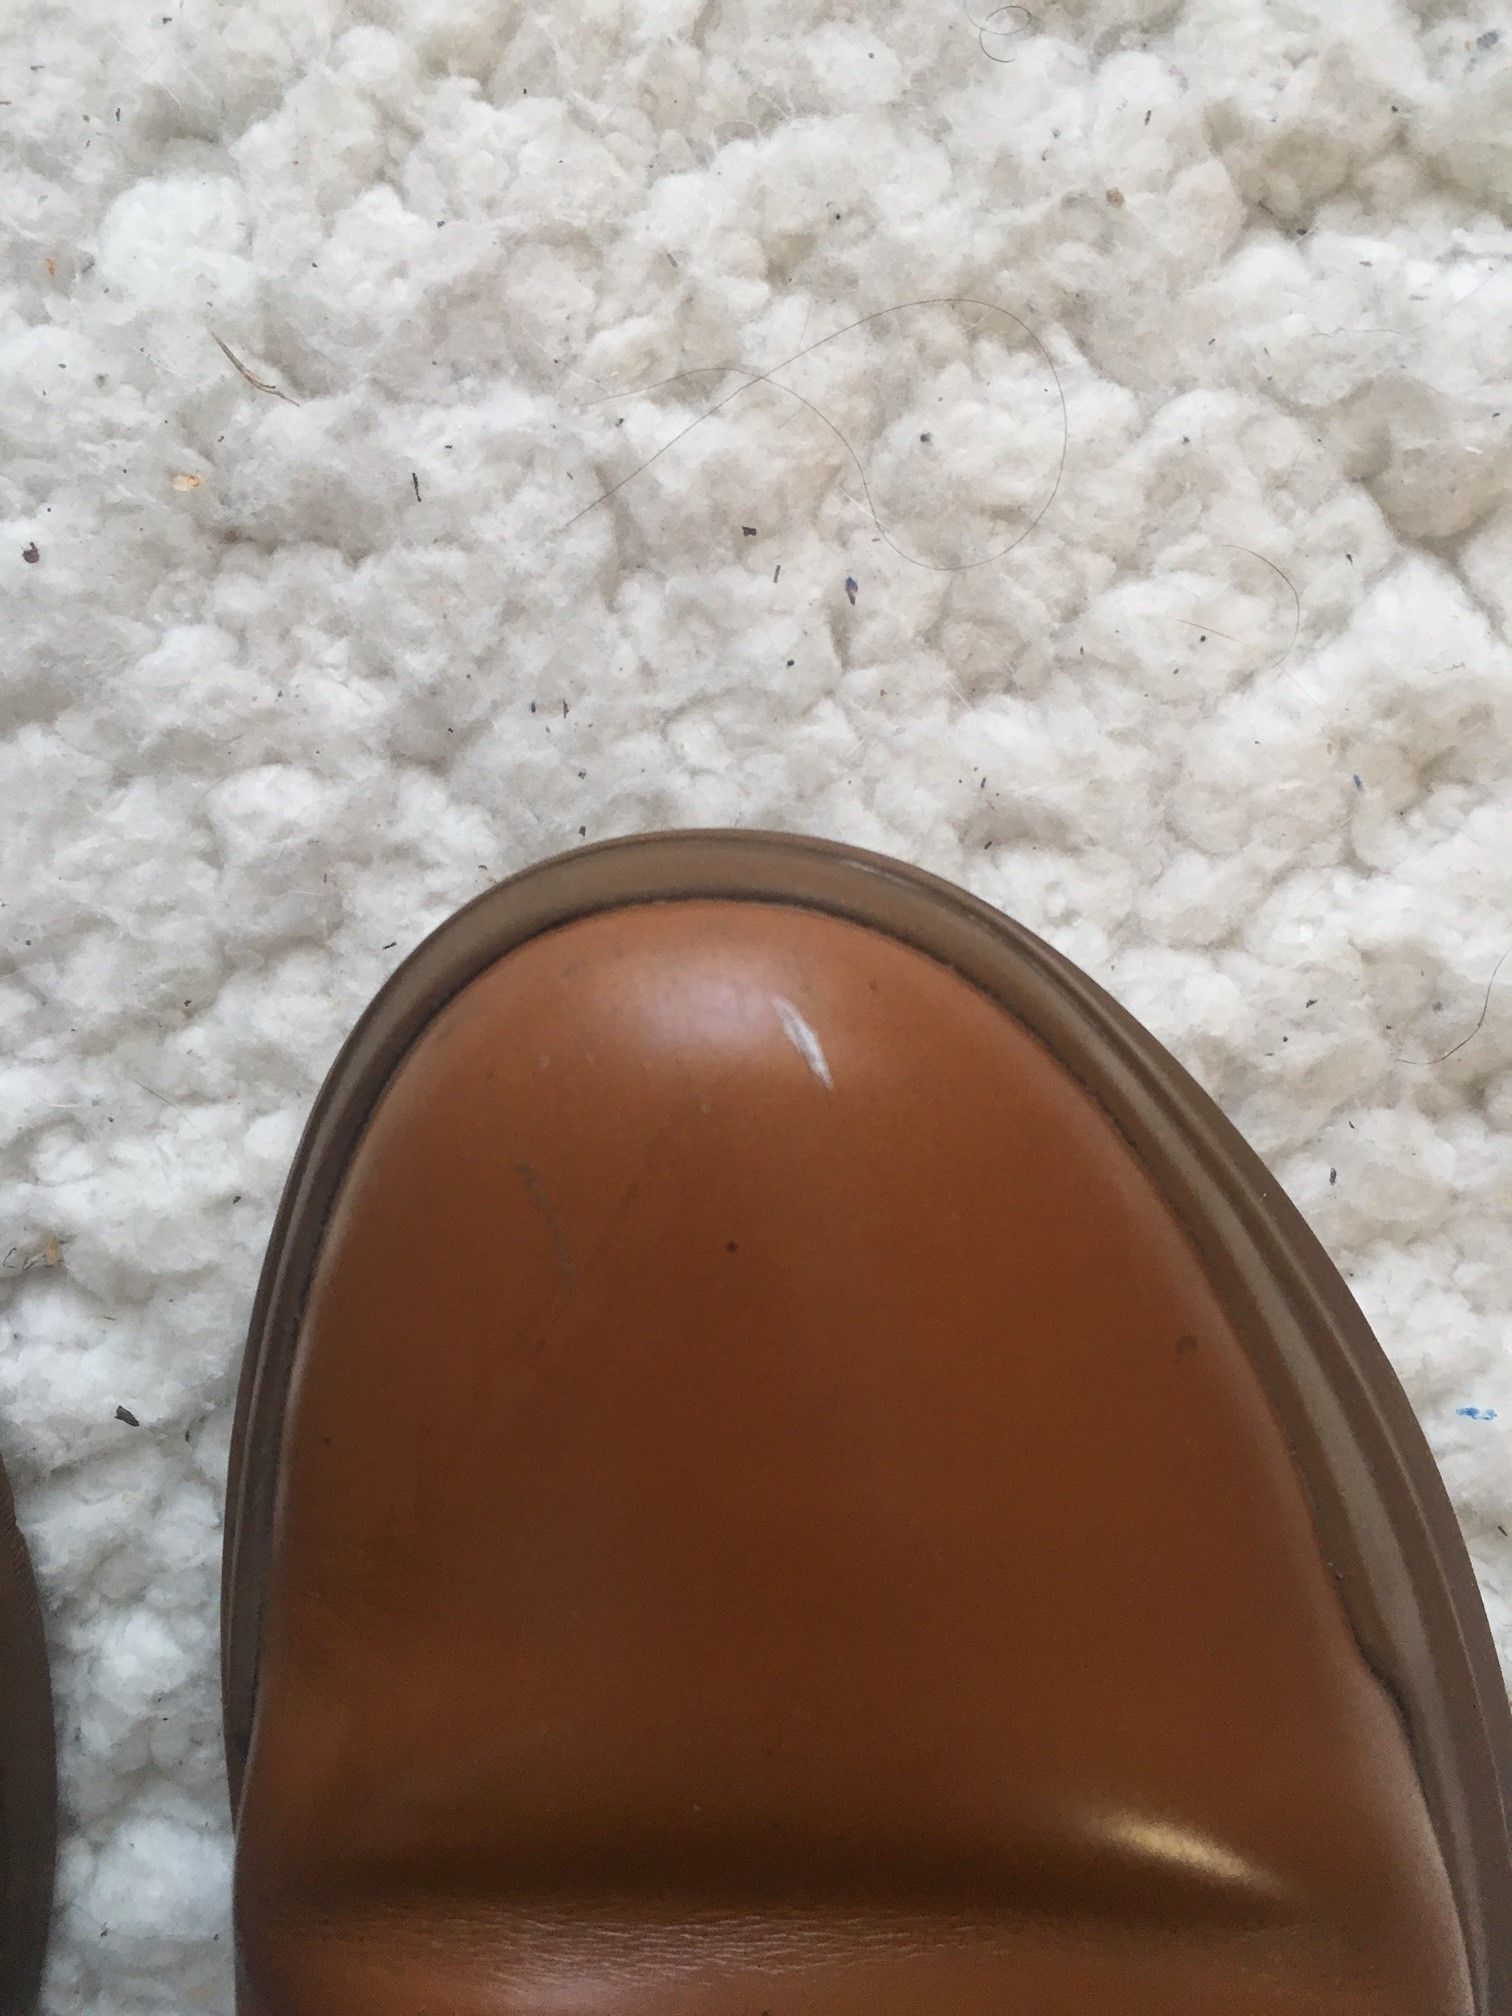 Prada Prada rubber sole sneakers 10 11 Size US 11 / EU 44 - 5 Thumbnail